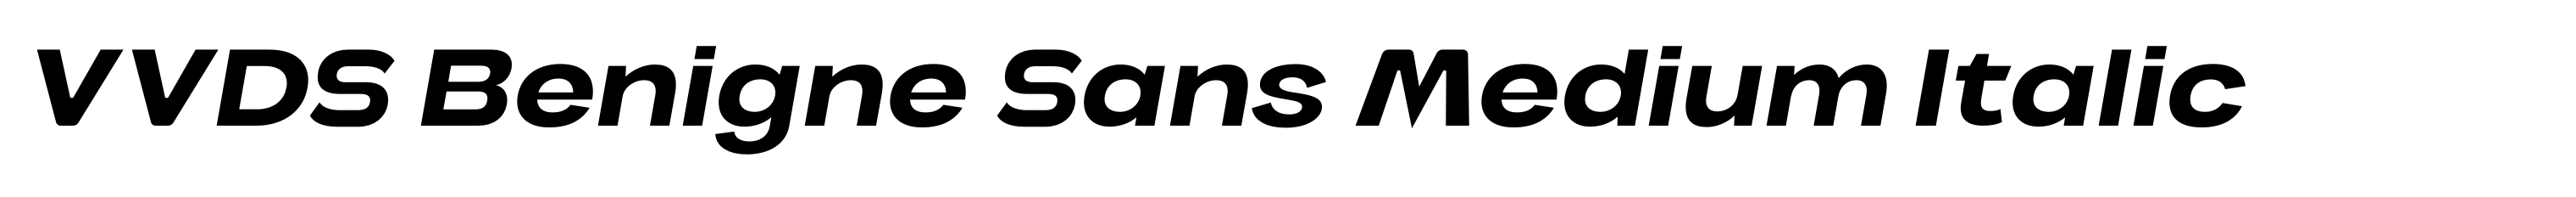 VVDS Benigne Sans Medium Italic